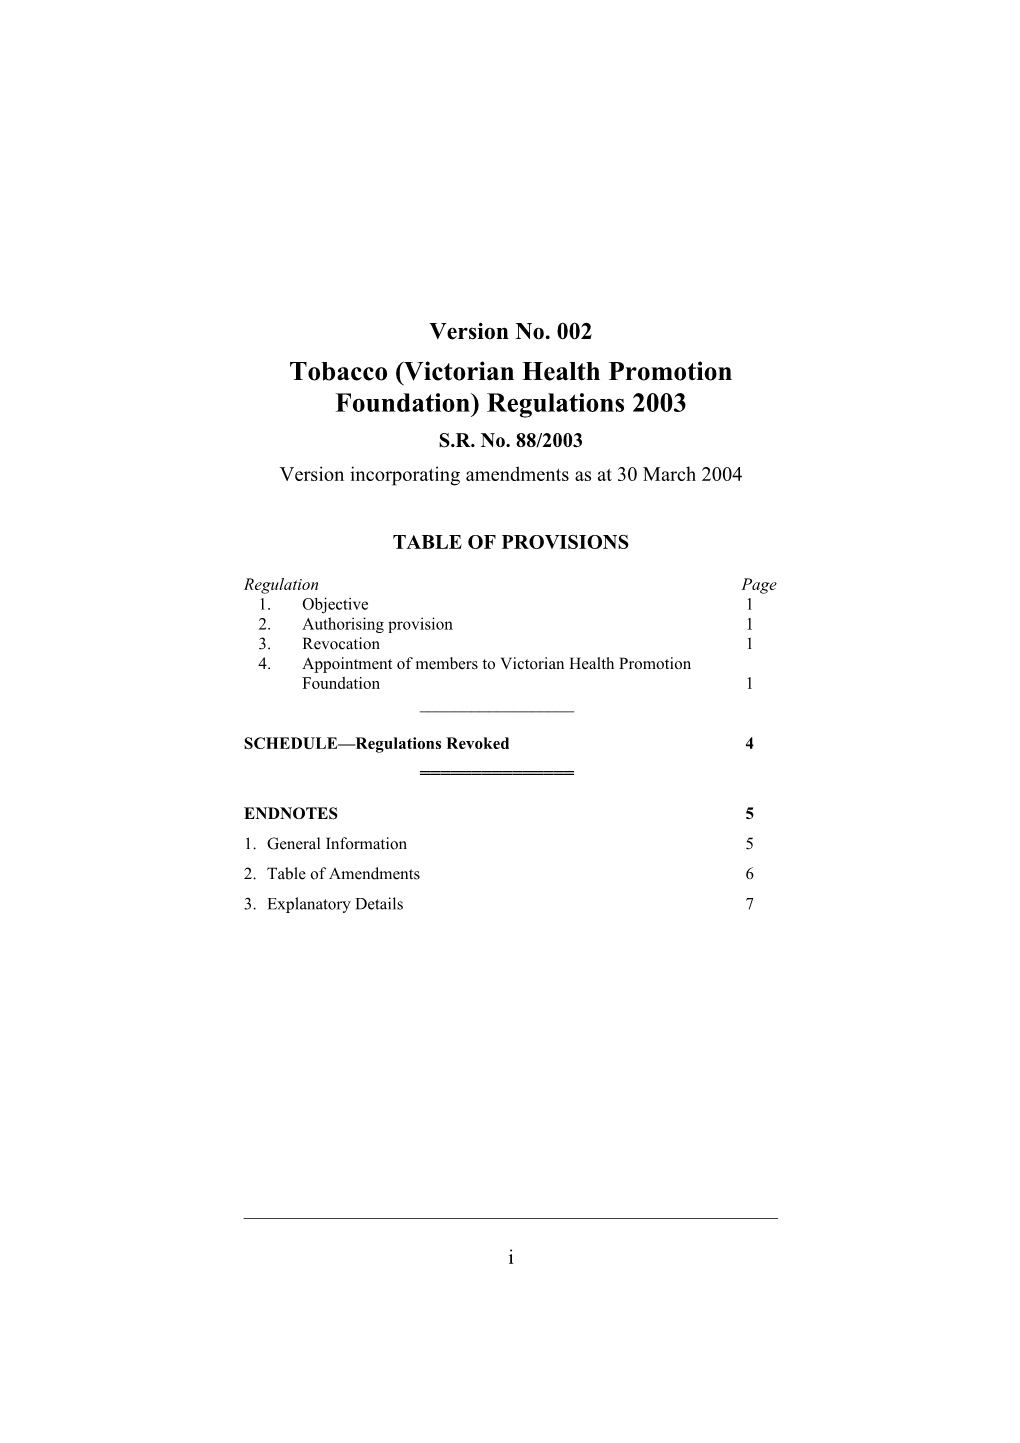 Tobacco (Victorian Health Promotion Foundation) Regulations 2003